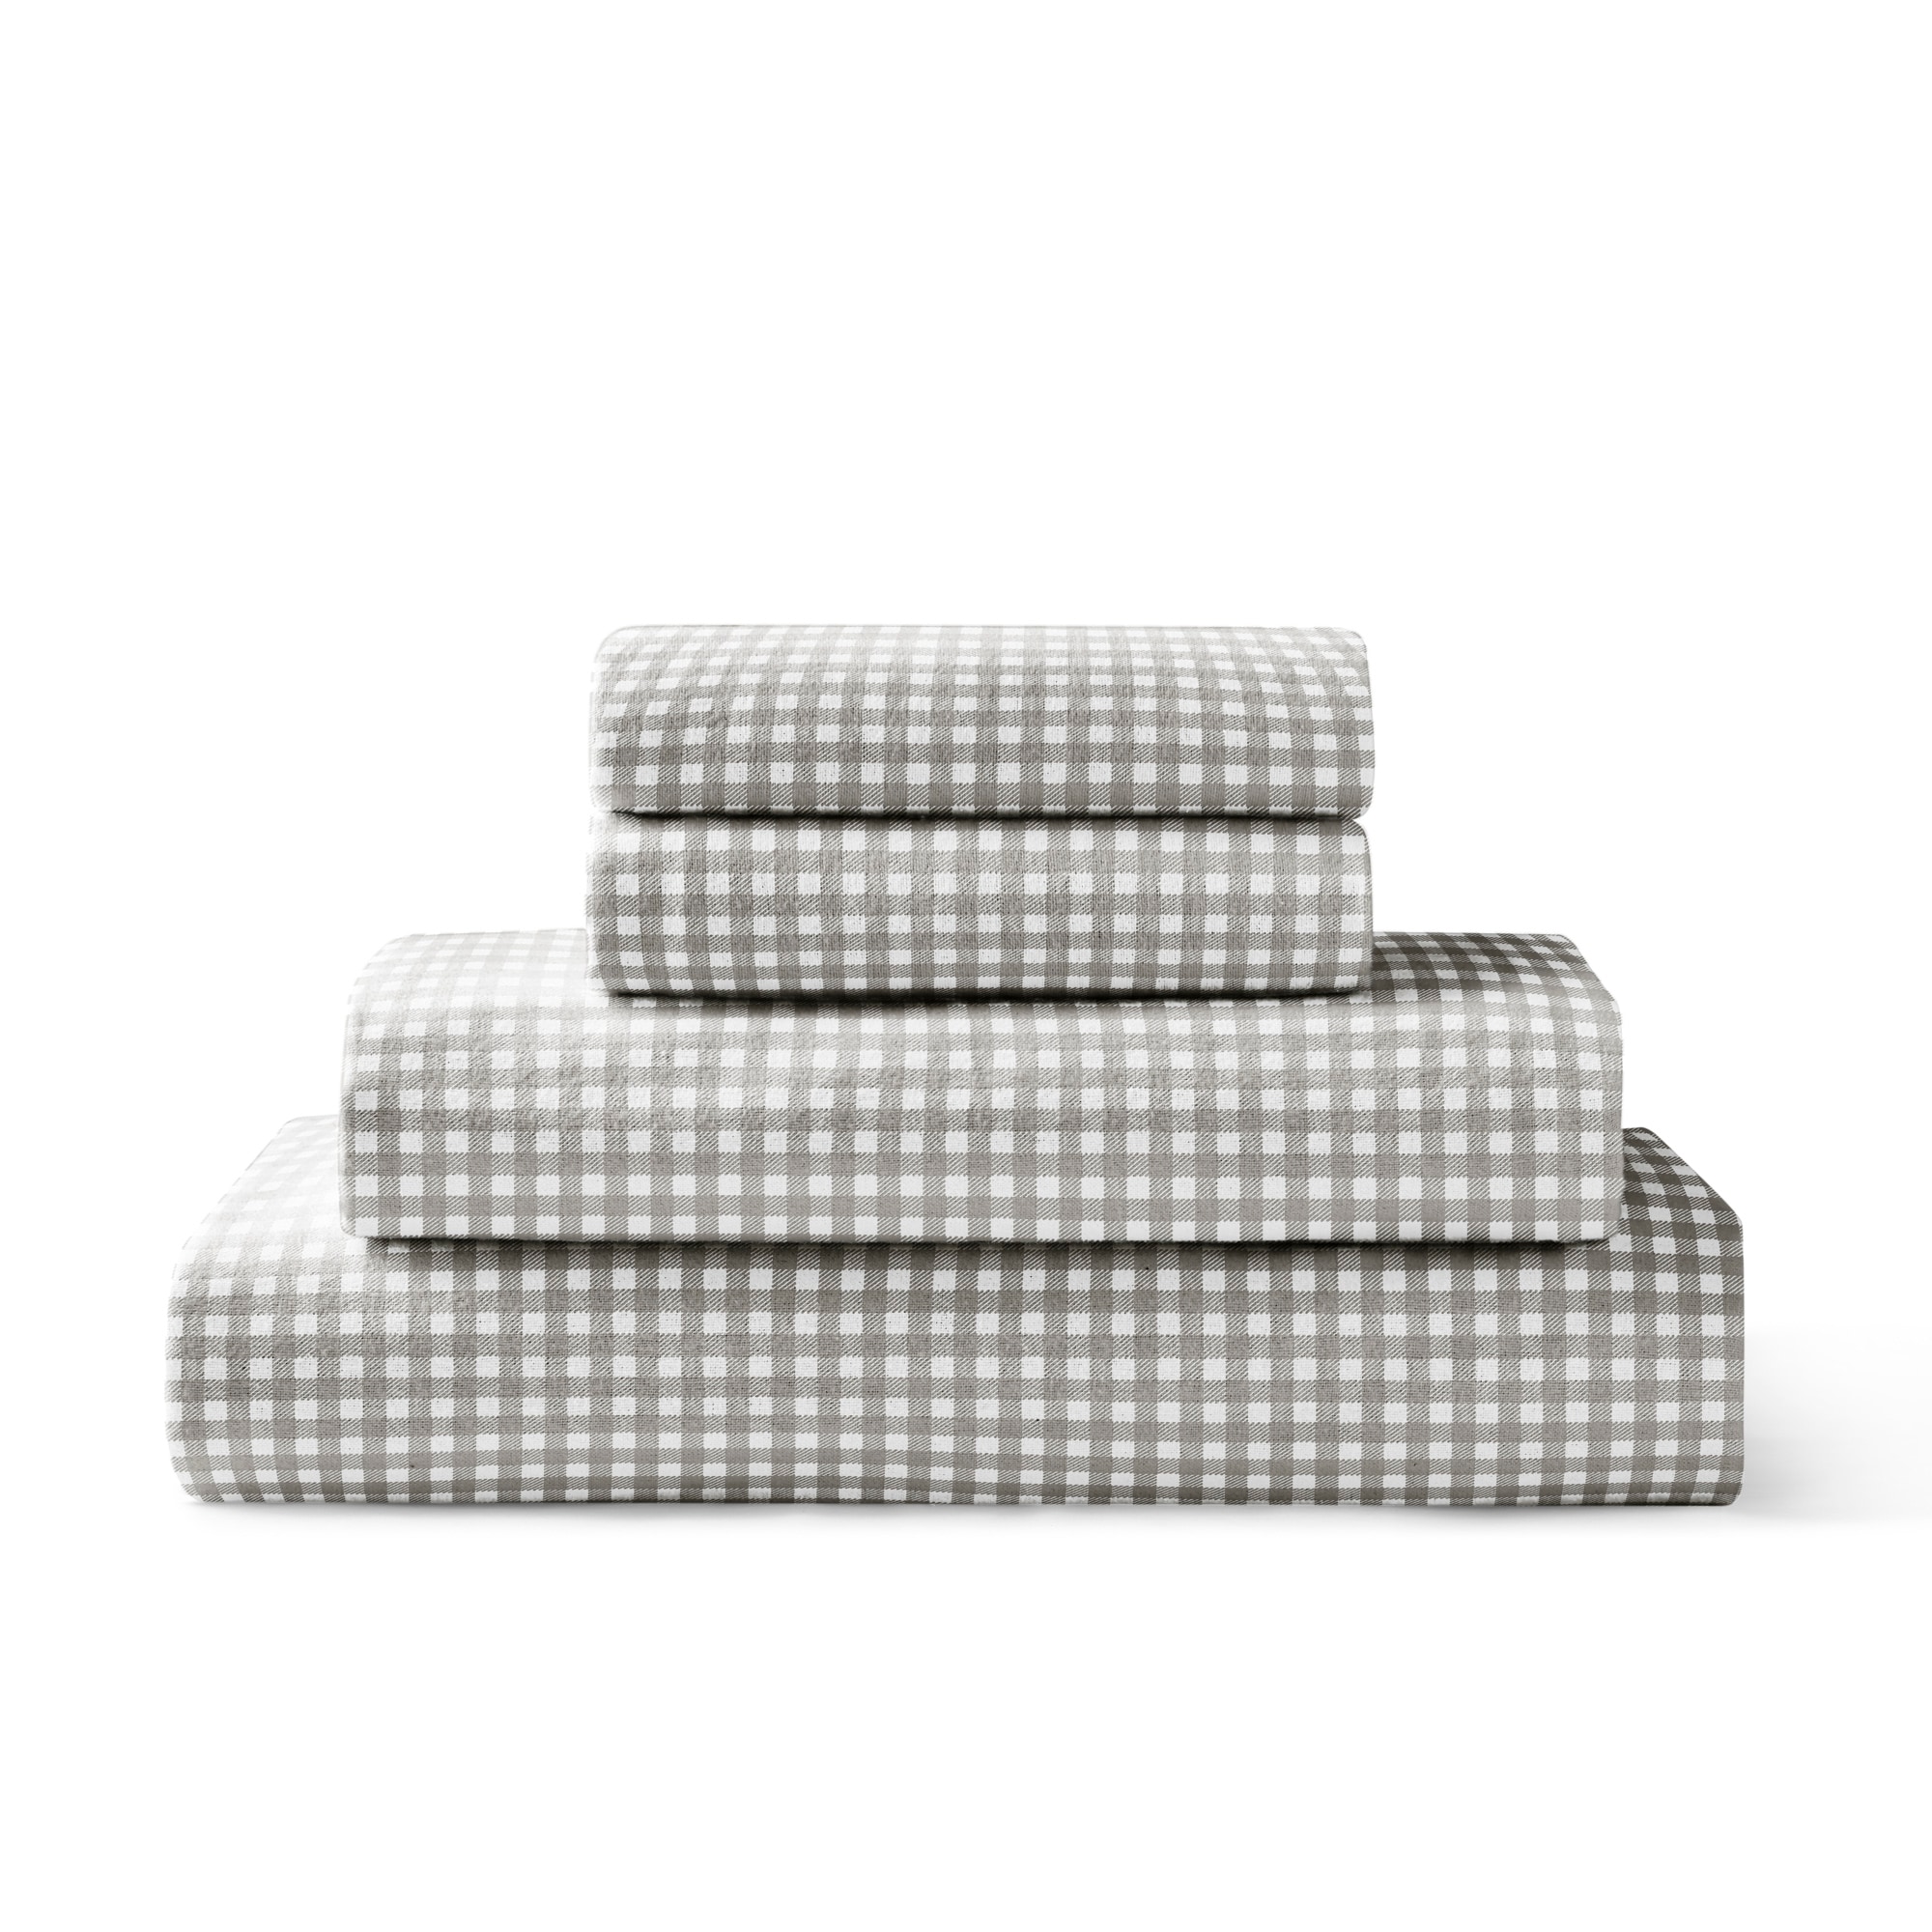 Set of 4 Black & White Gingham Patterned Rectangular Dish Towels 28